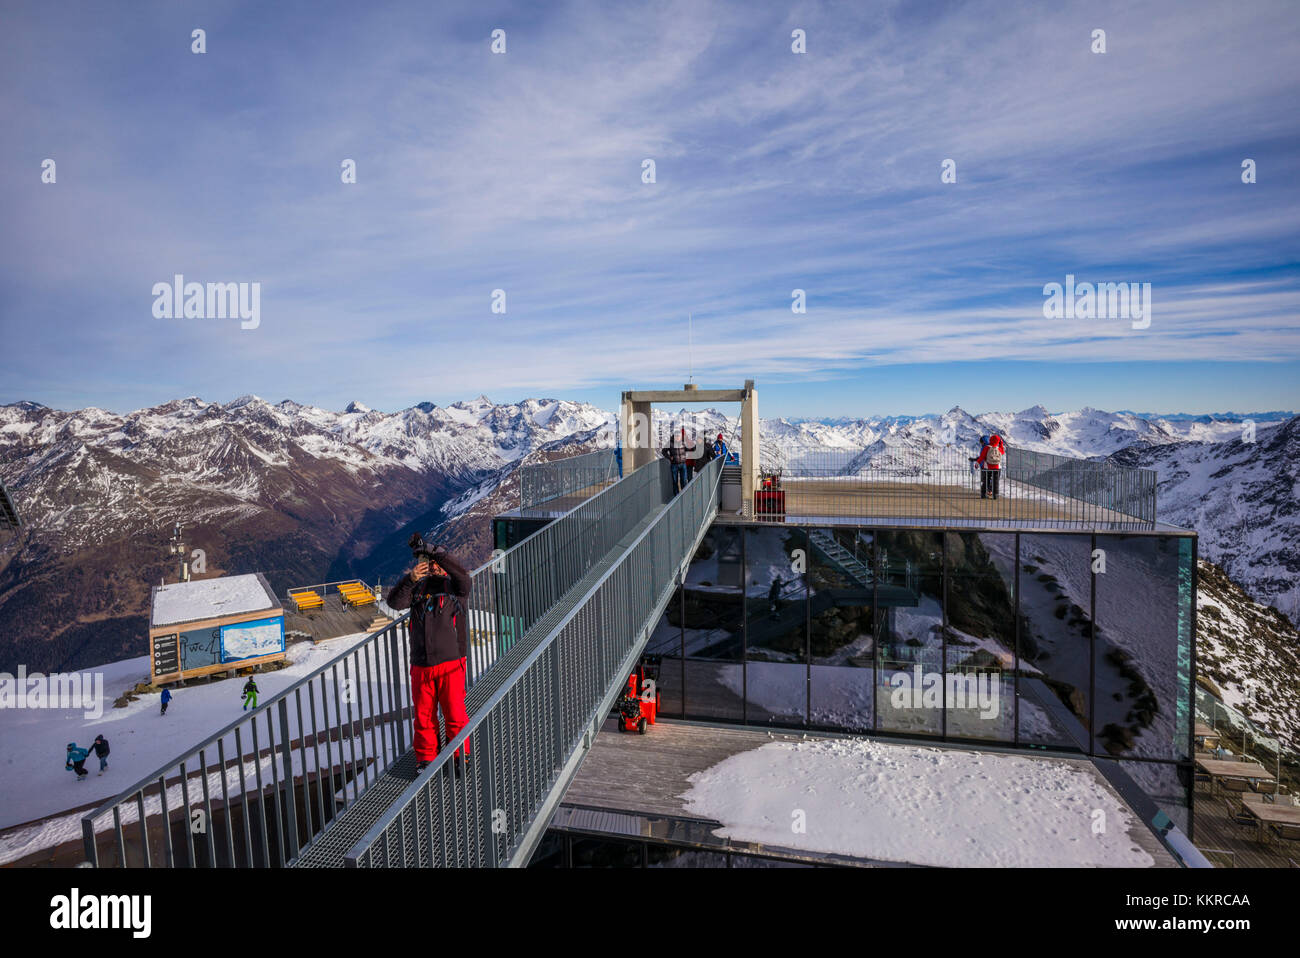 Austria, Tyrol, Otztal, Solden, Gaislachkogl ski mountain, Gaislachkogl Summit, elevation 3058 meters, Ice Q gourmet restaurant Stock Photo